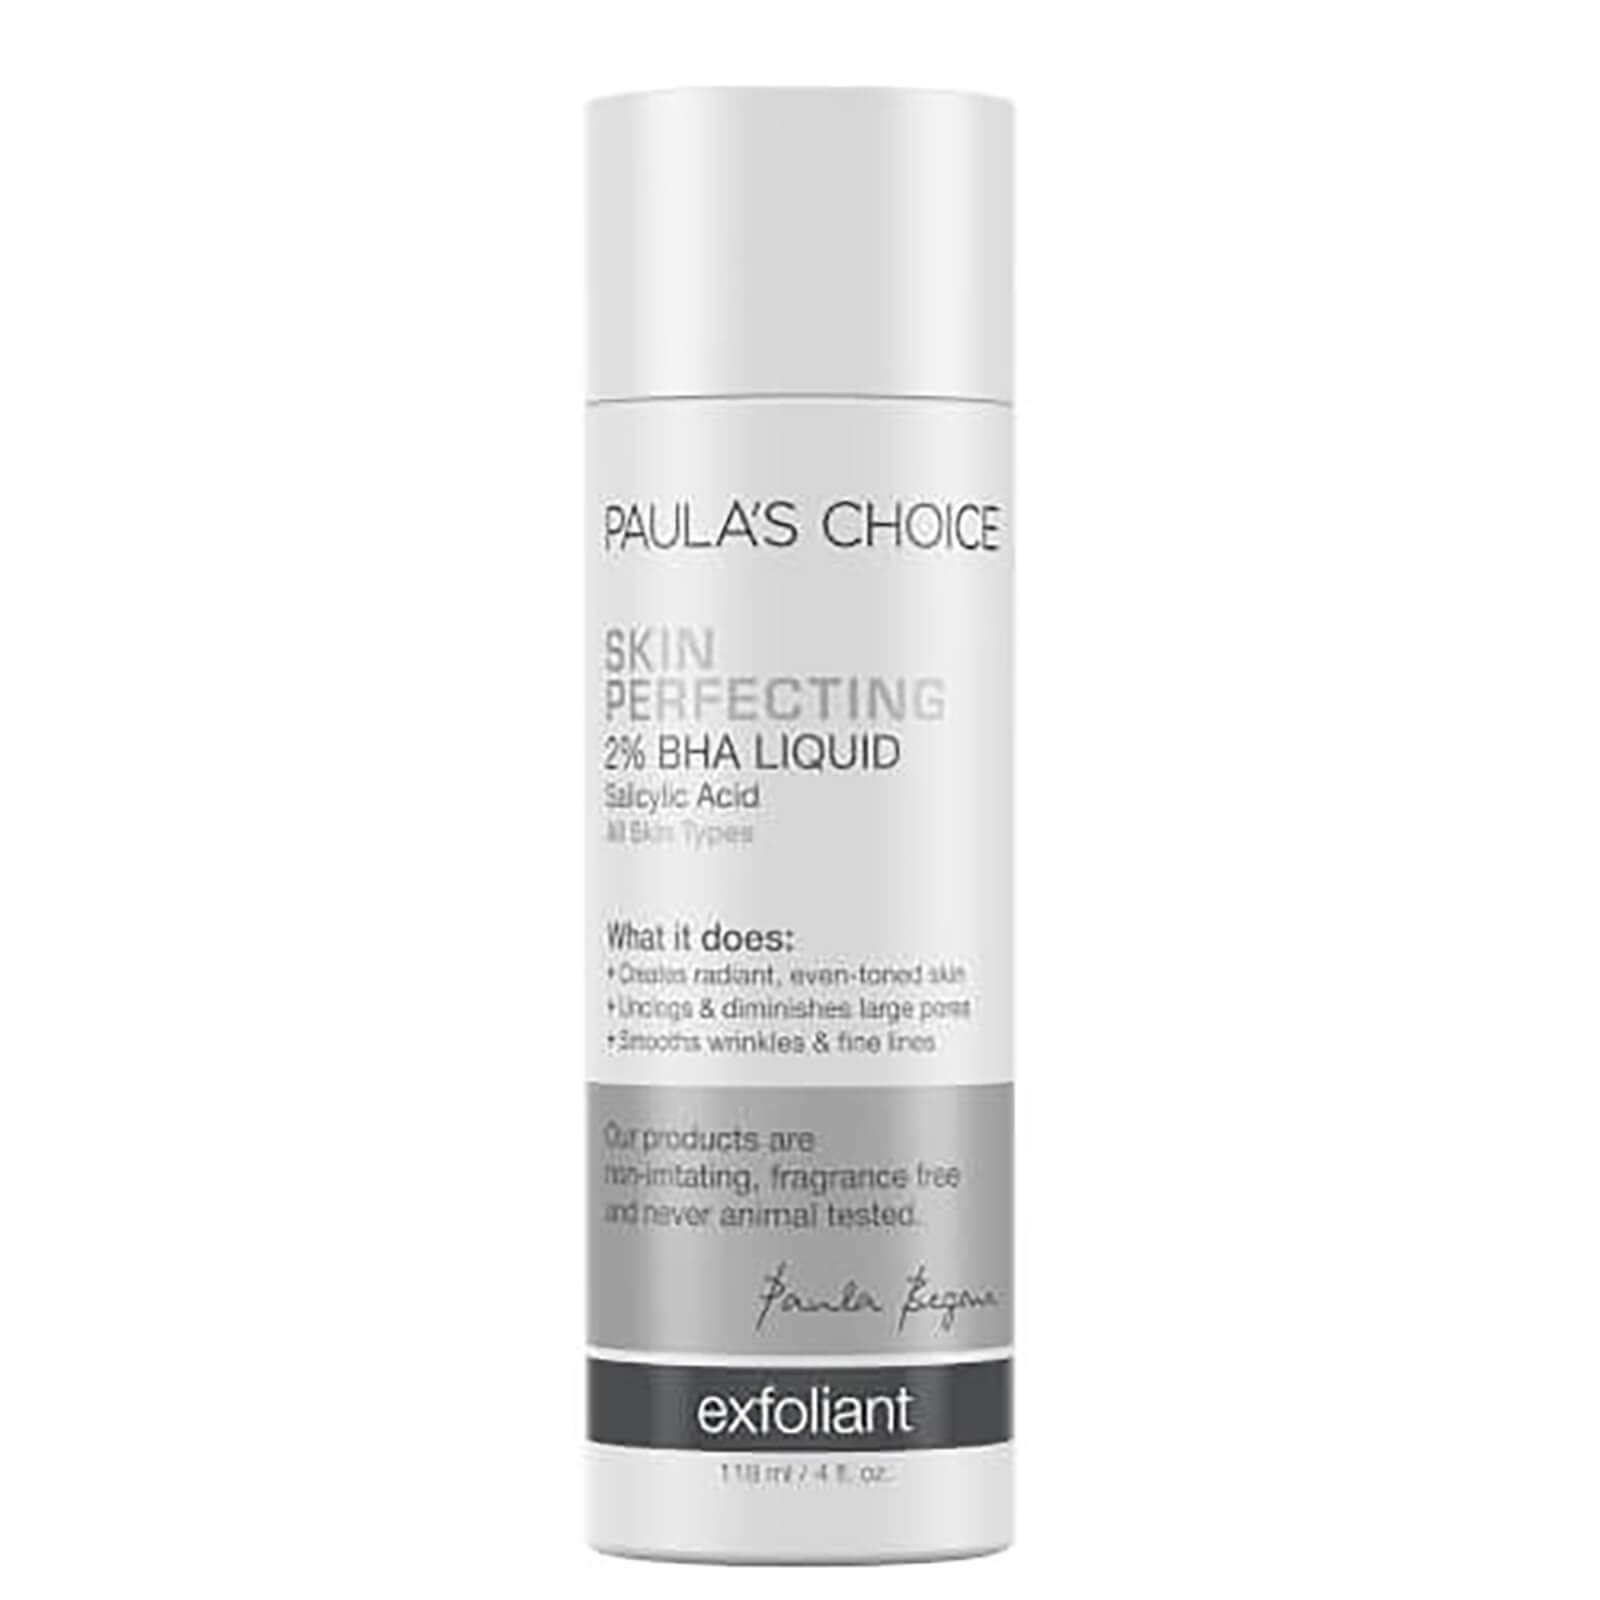 Paula's Choice Skin Perfecting 2% BHA Liquid Exfoliant (4 fl. oz)